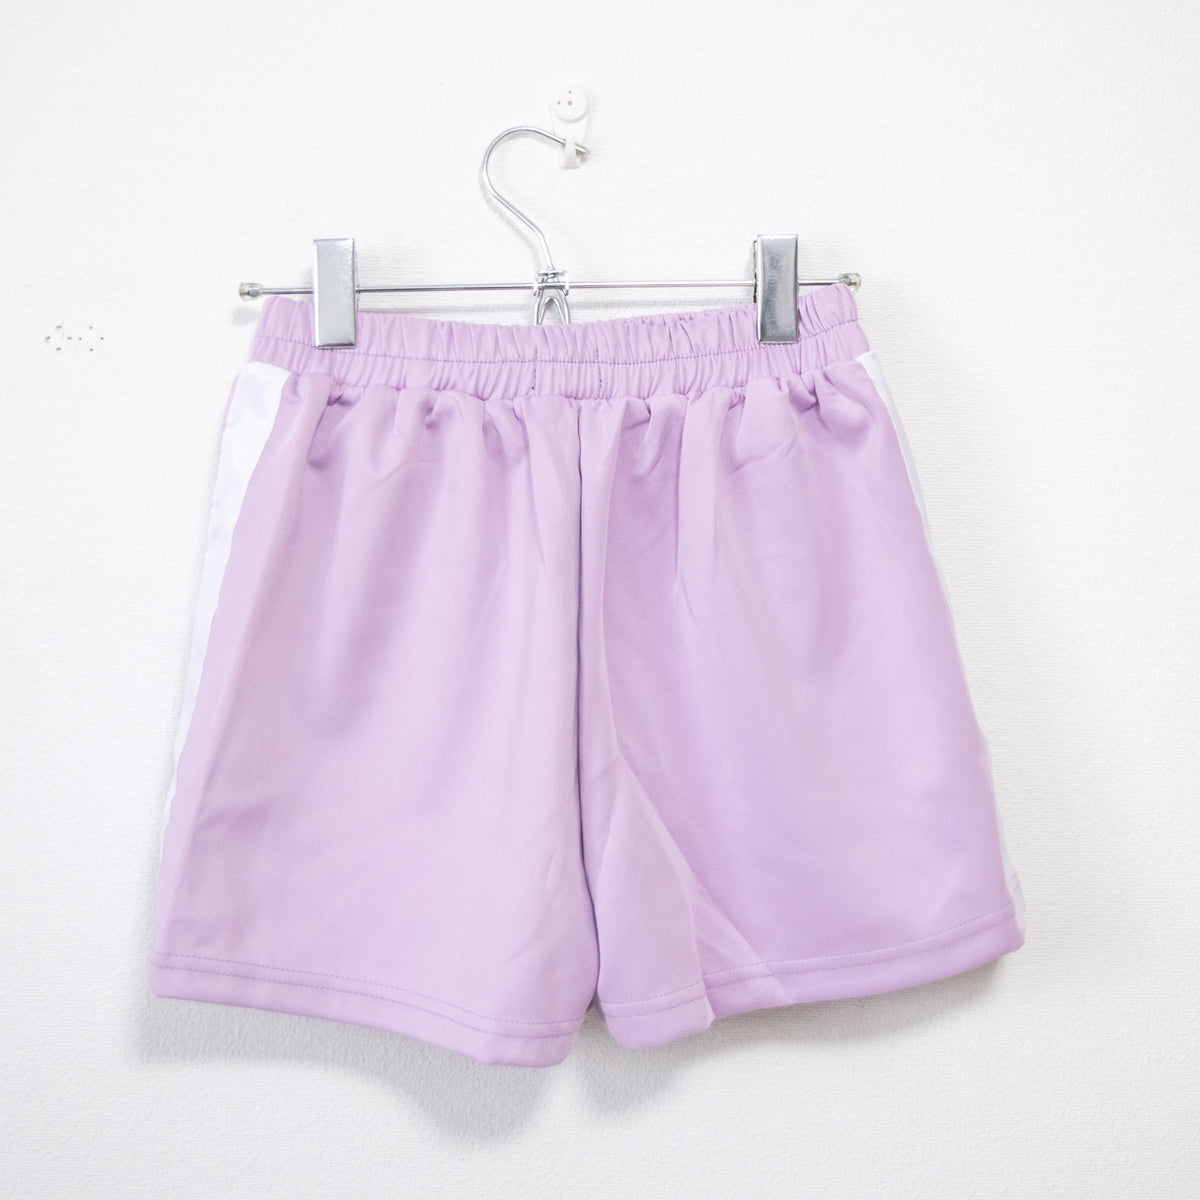 ACDC RAG Side Double Line Jersey Short Pants Light Purple